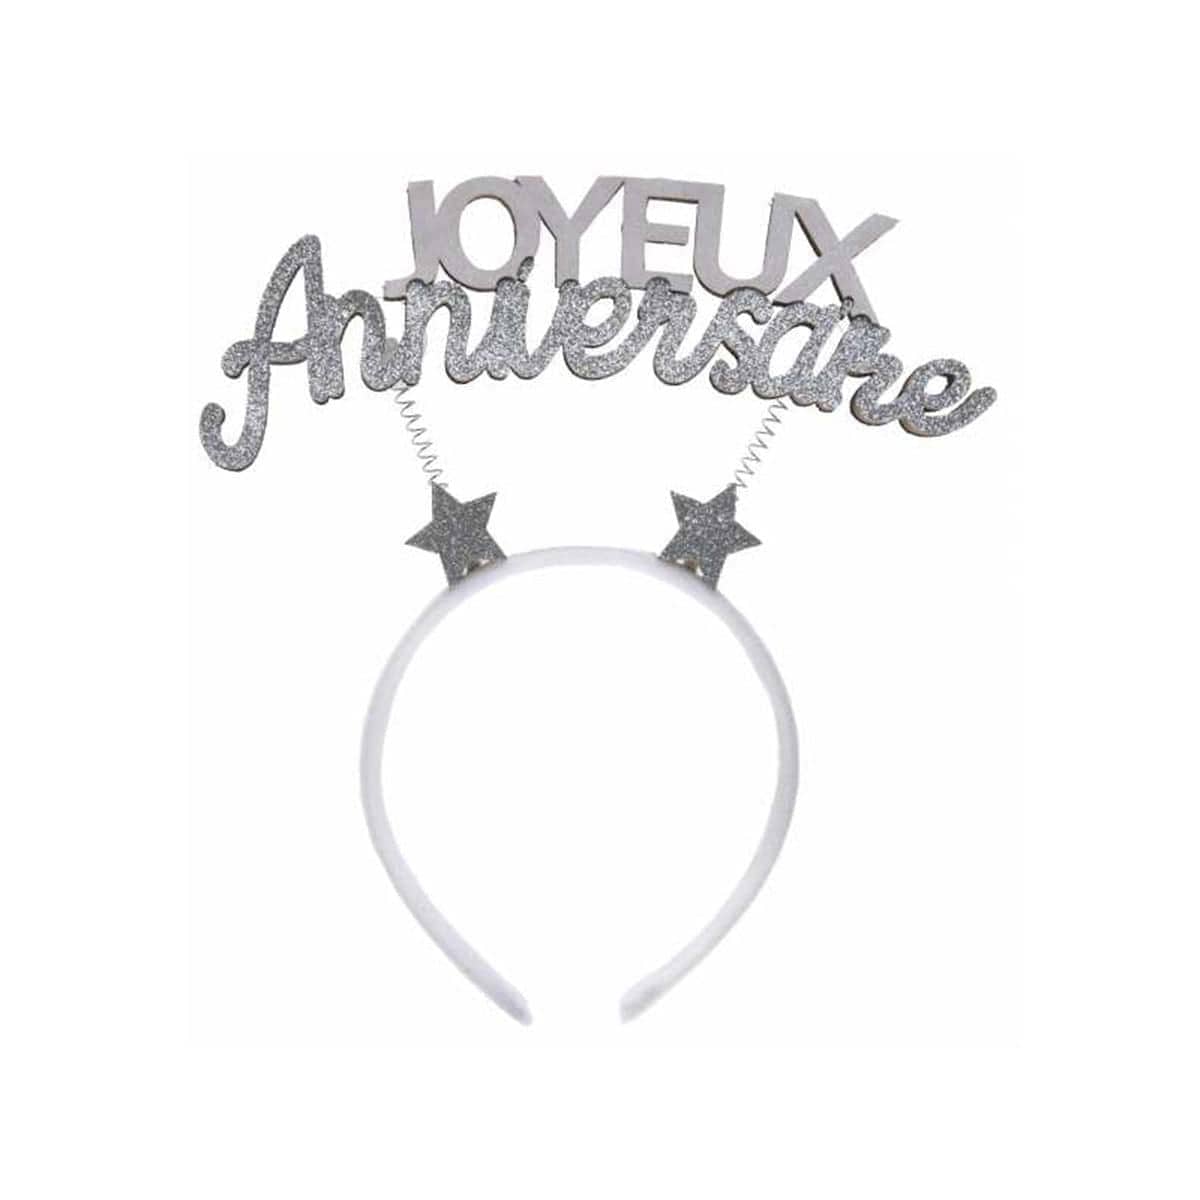 SANTEX General Birthday Sparkly "Joyeux Anniversaire" Headband, Silver